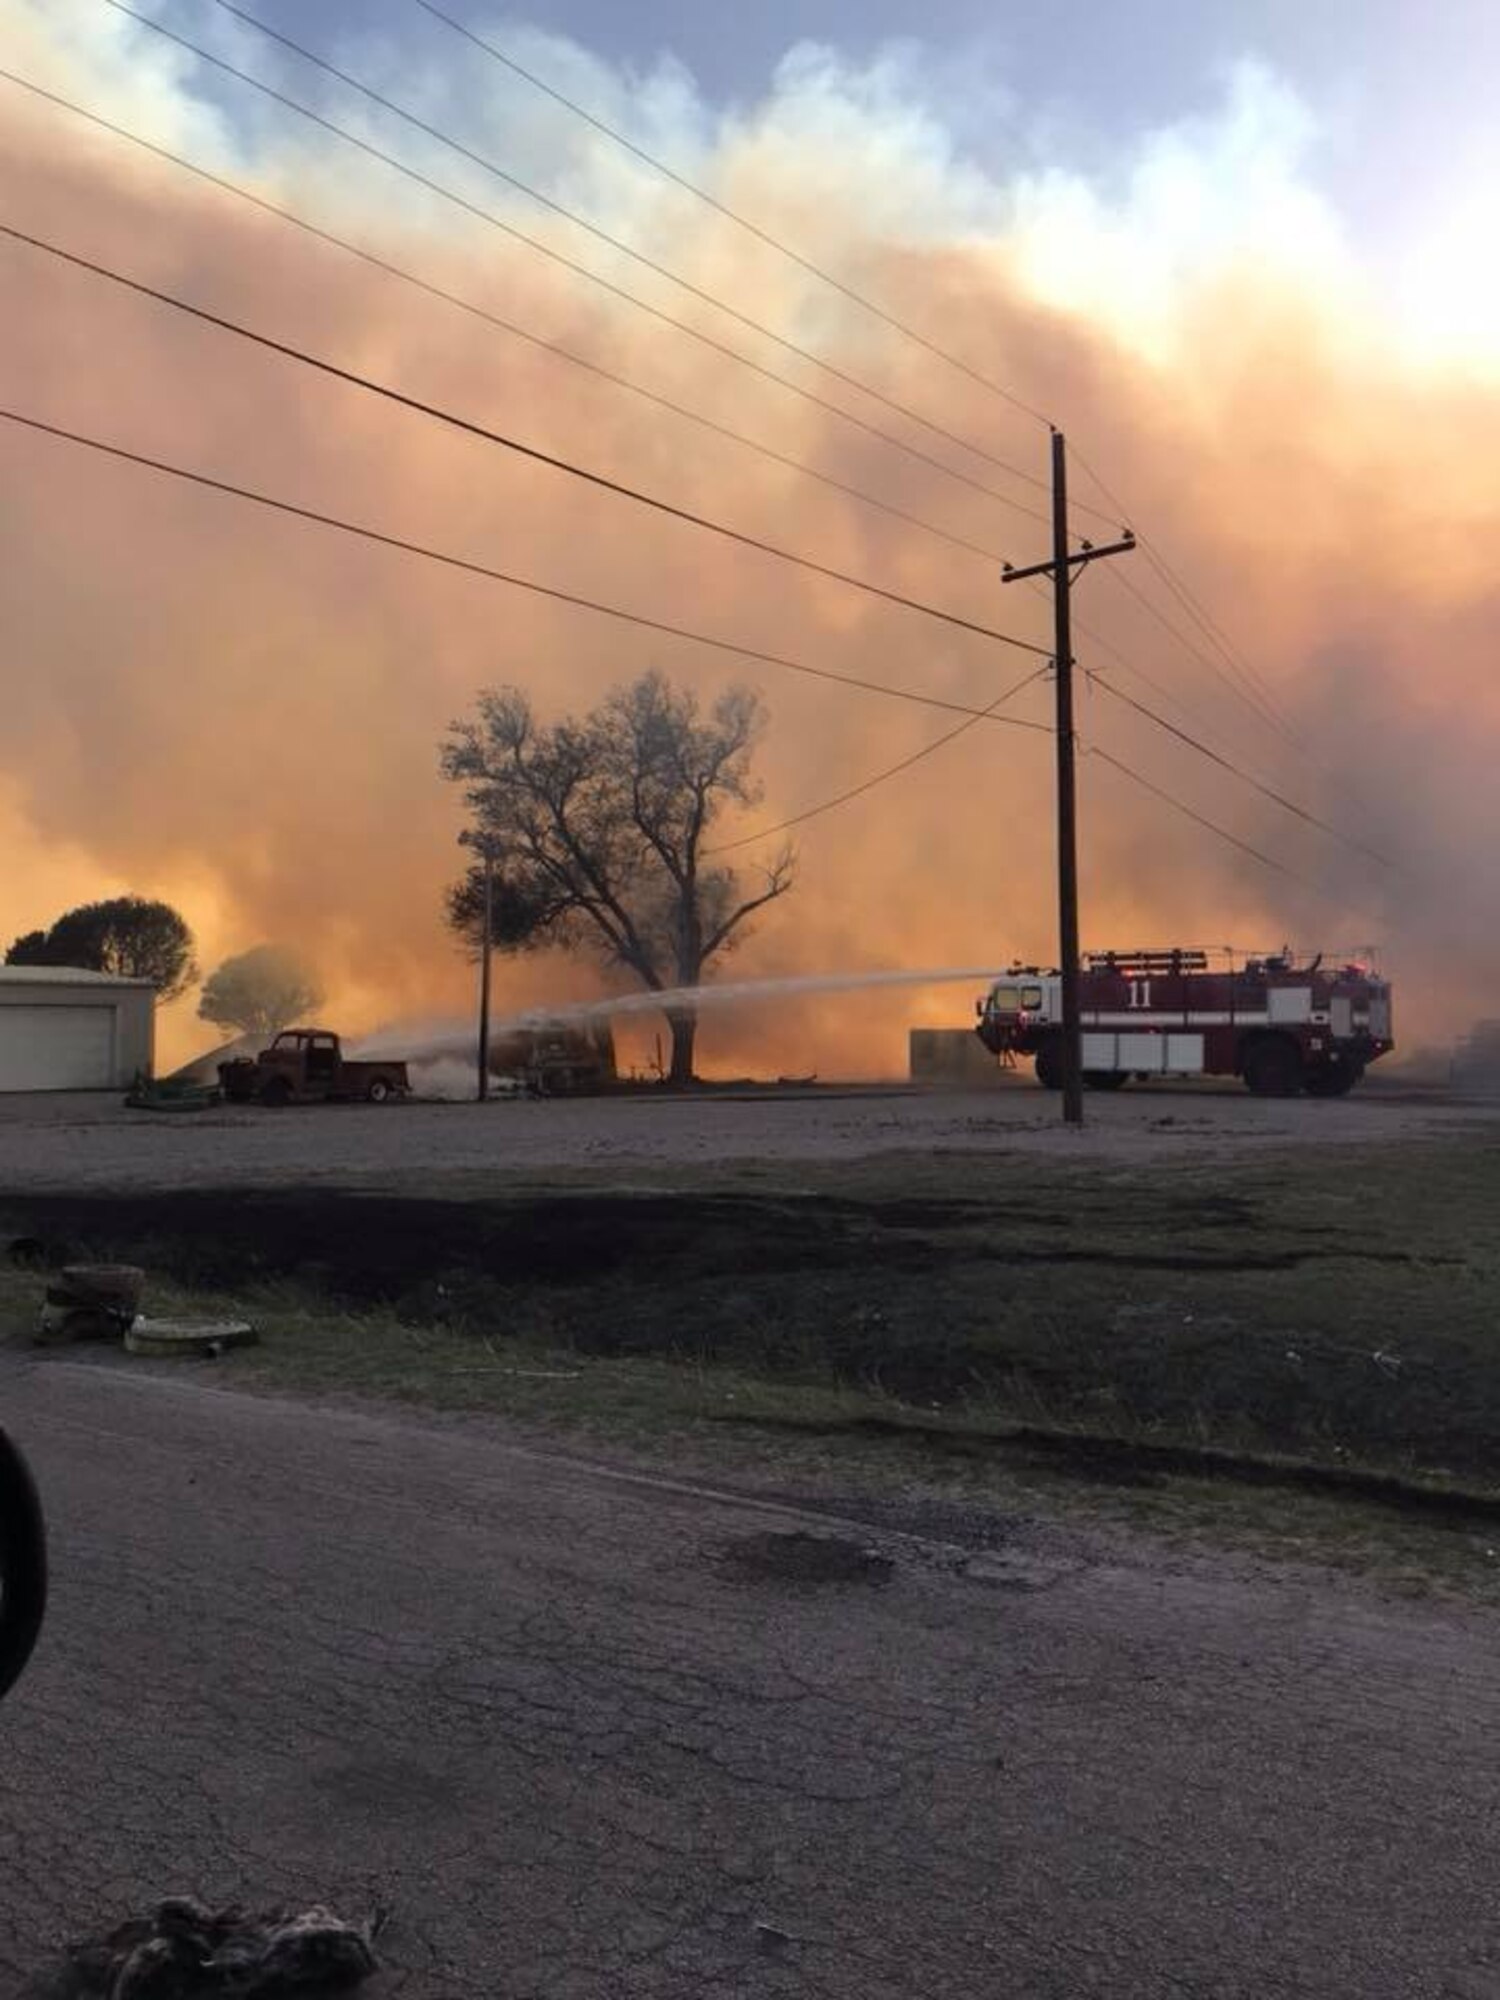 Mutual aid responders suppress a major fire, April 14, 2018, Martha, Okla.